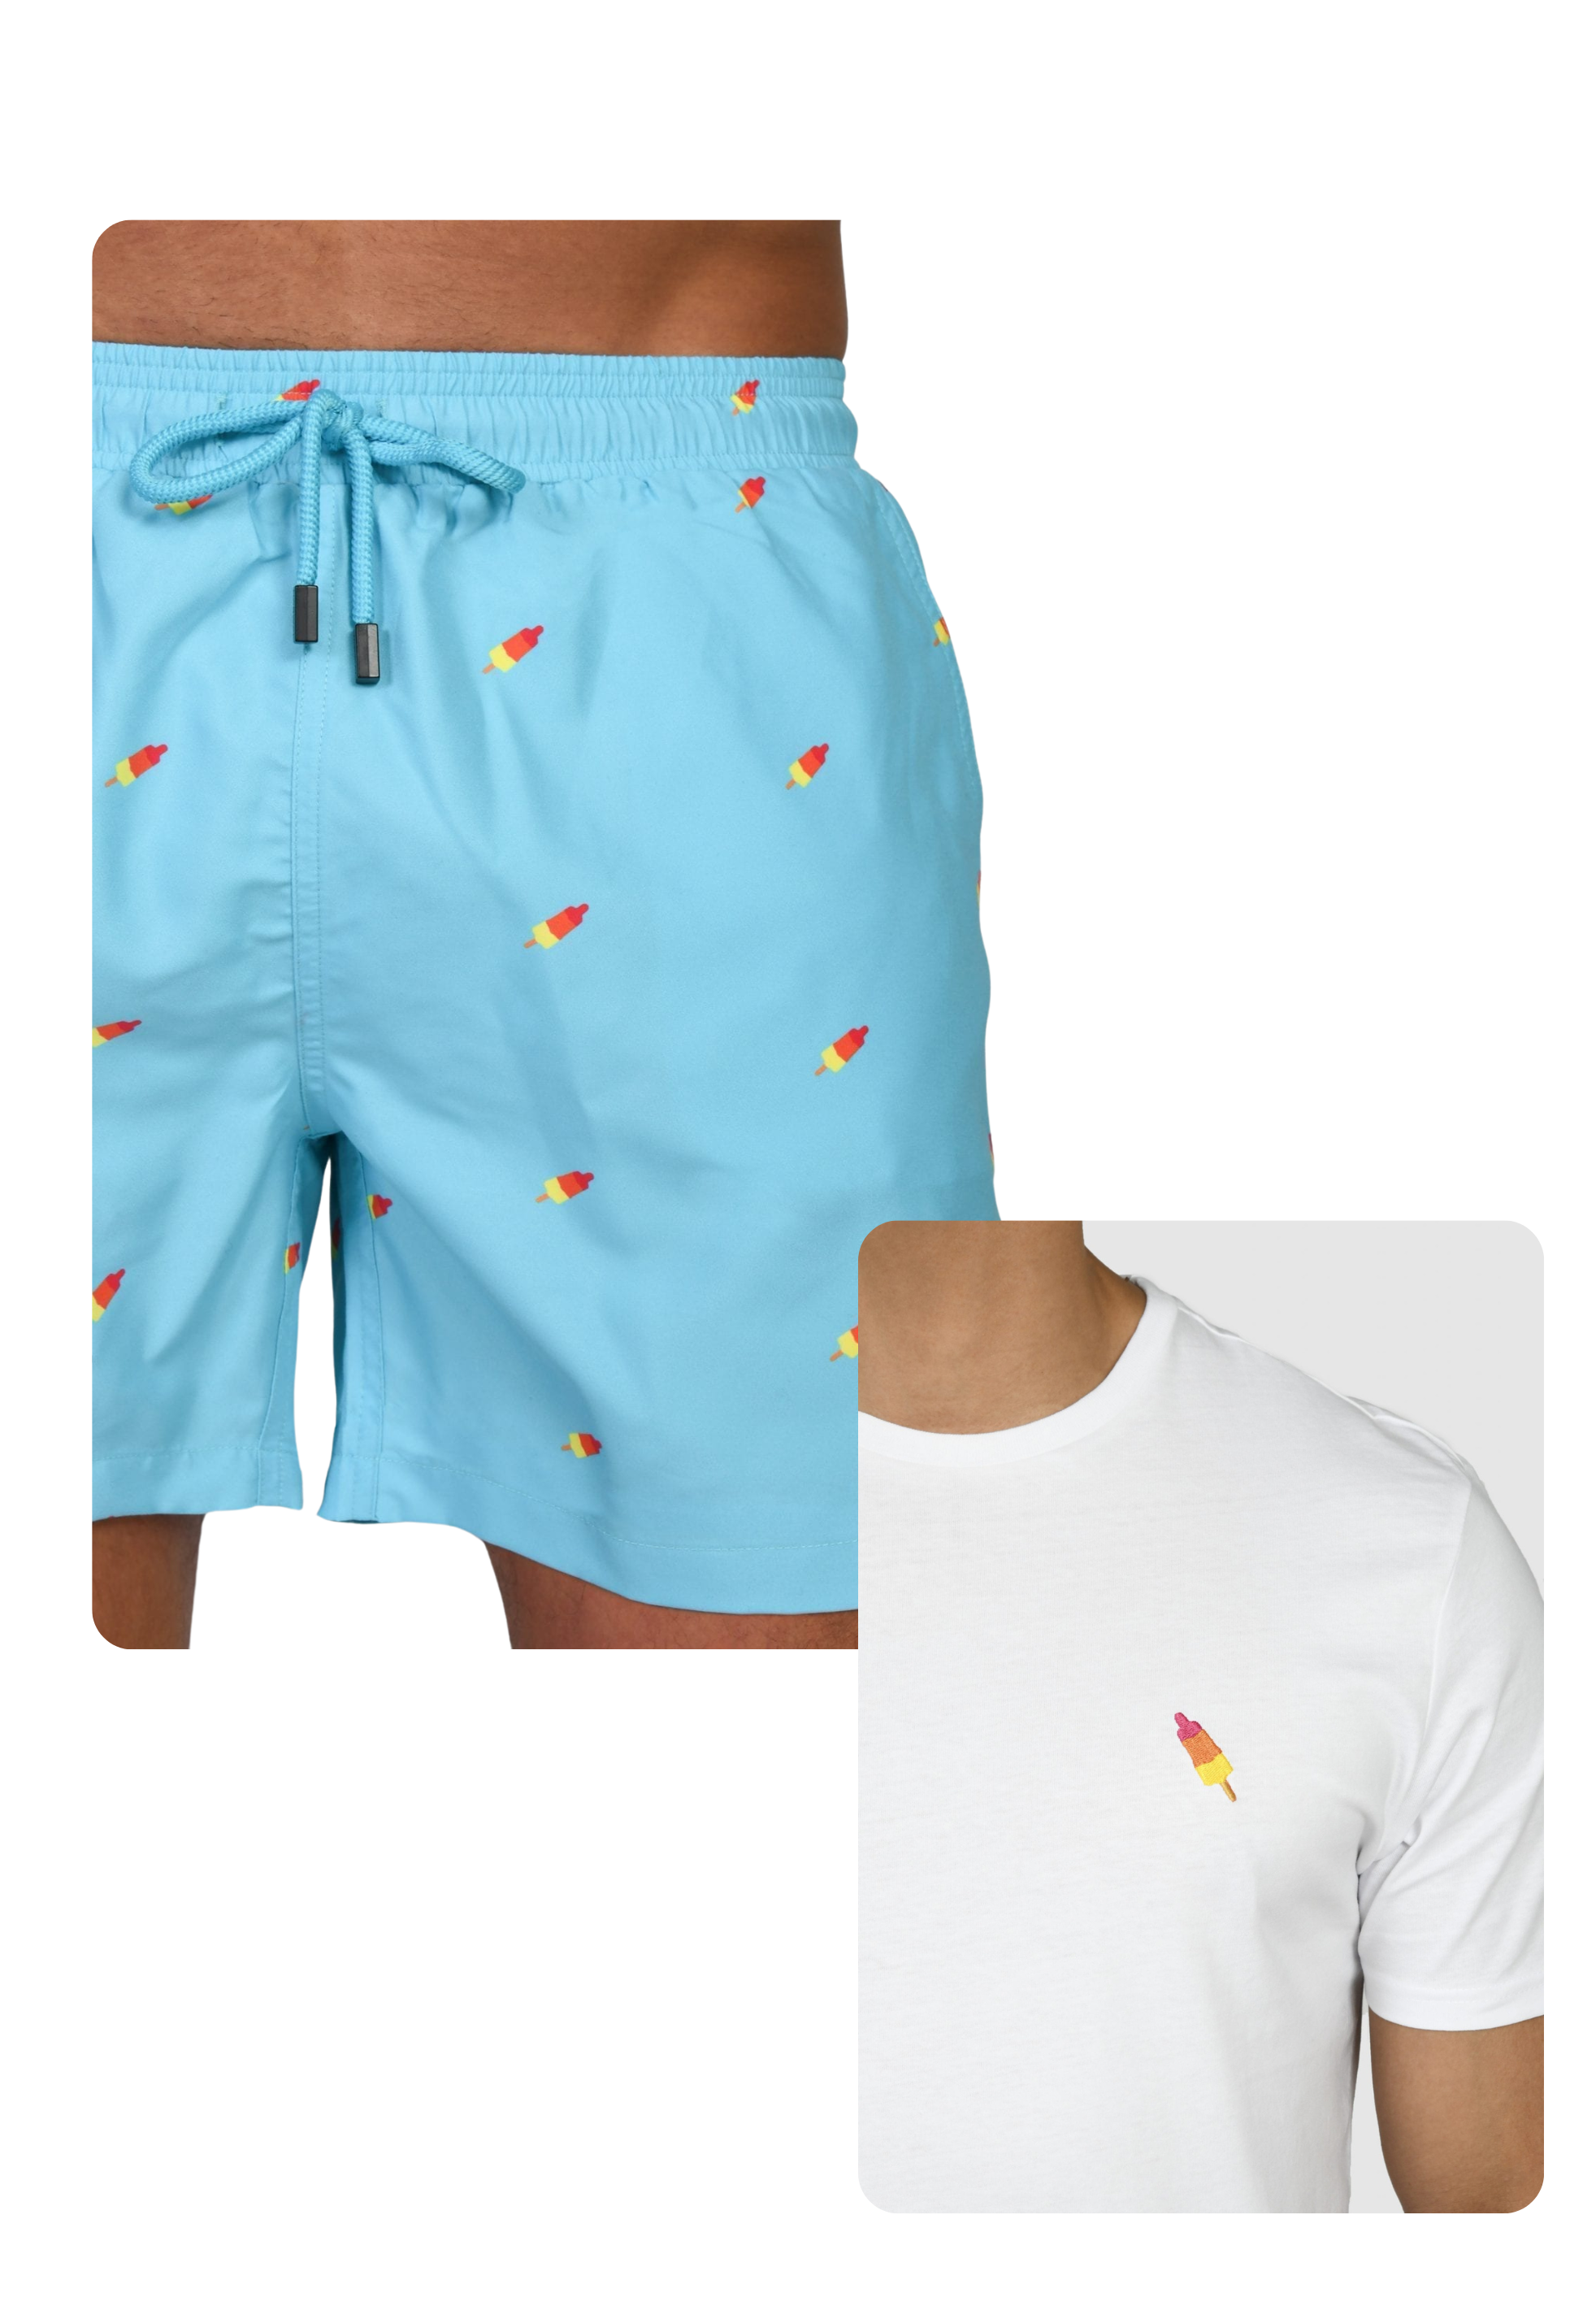 Icelolly Swim Trunks & T-shirt Bundle